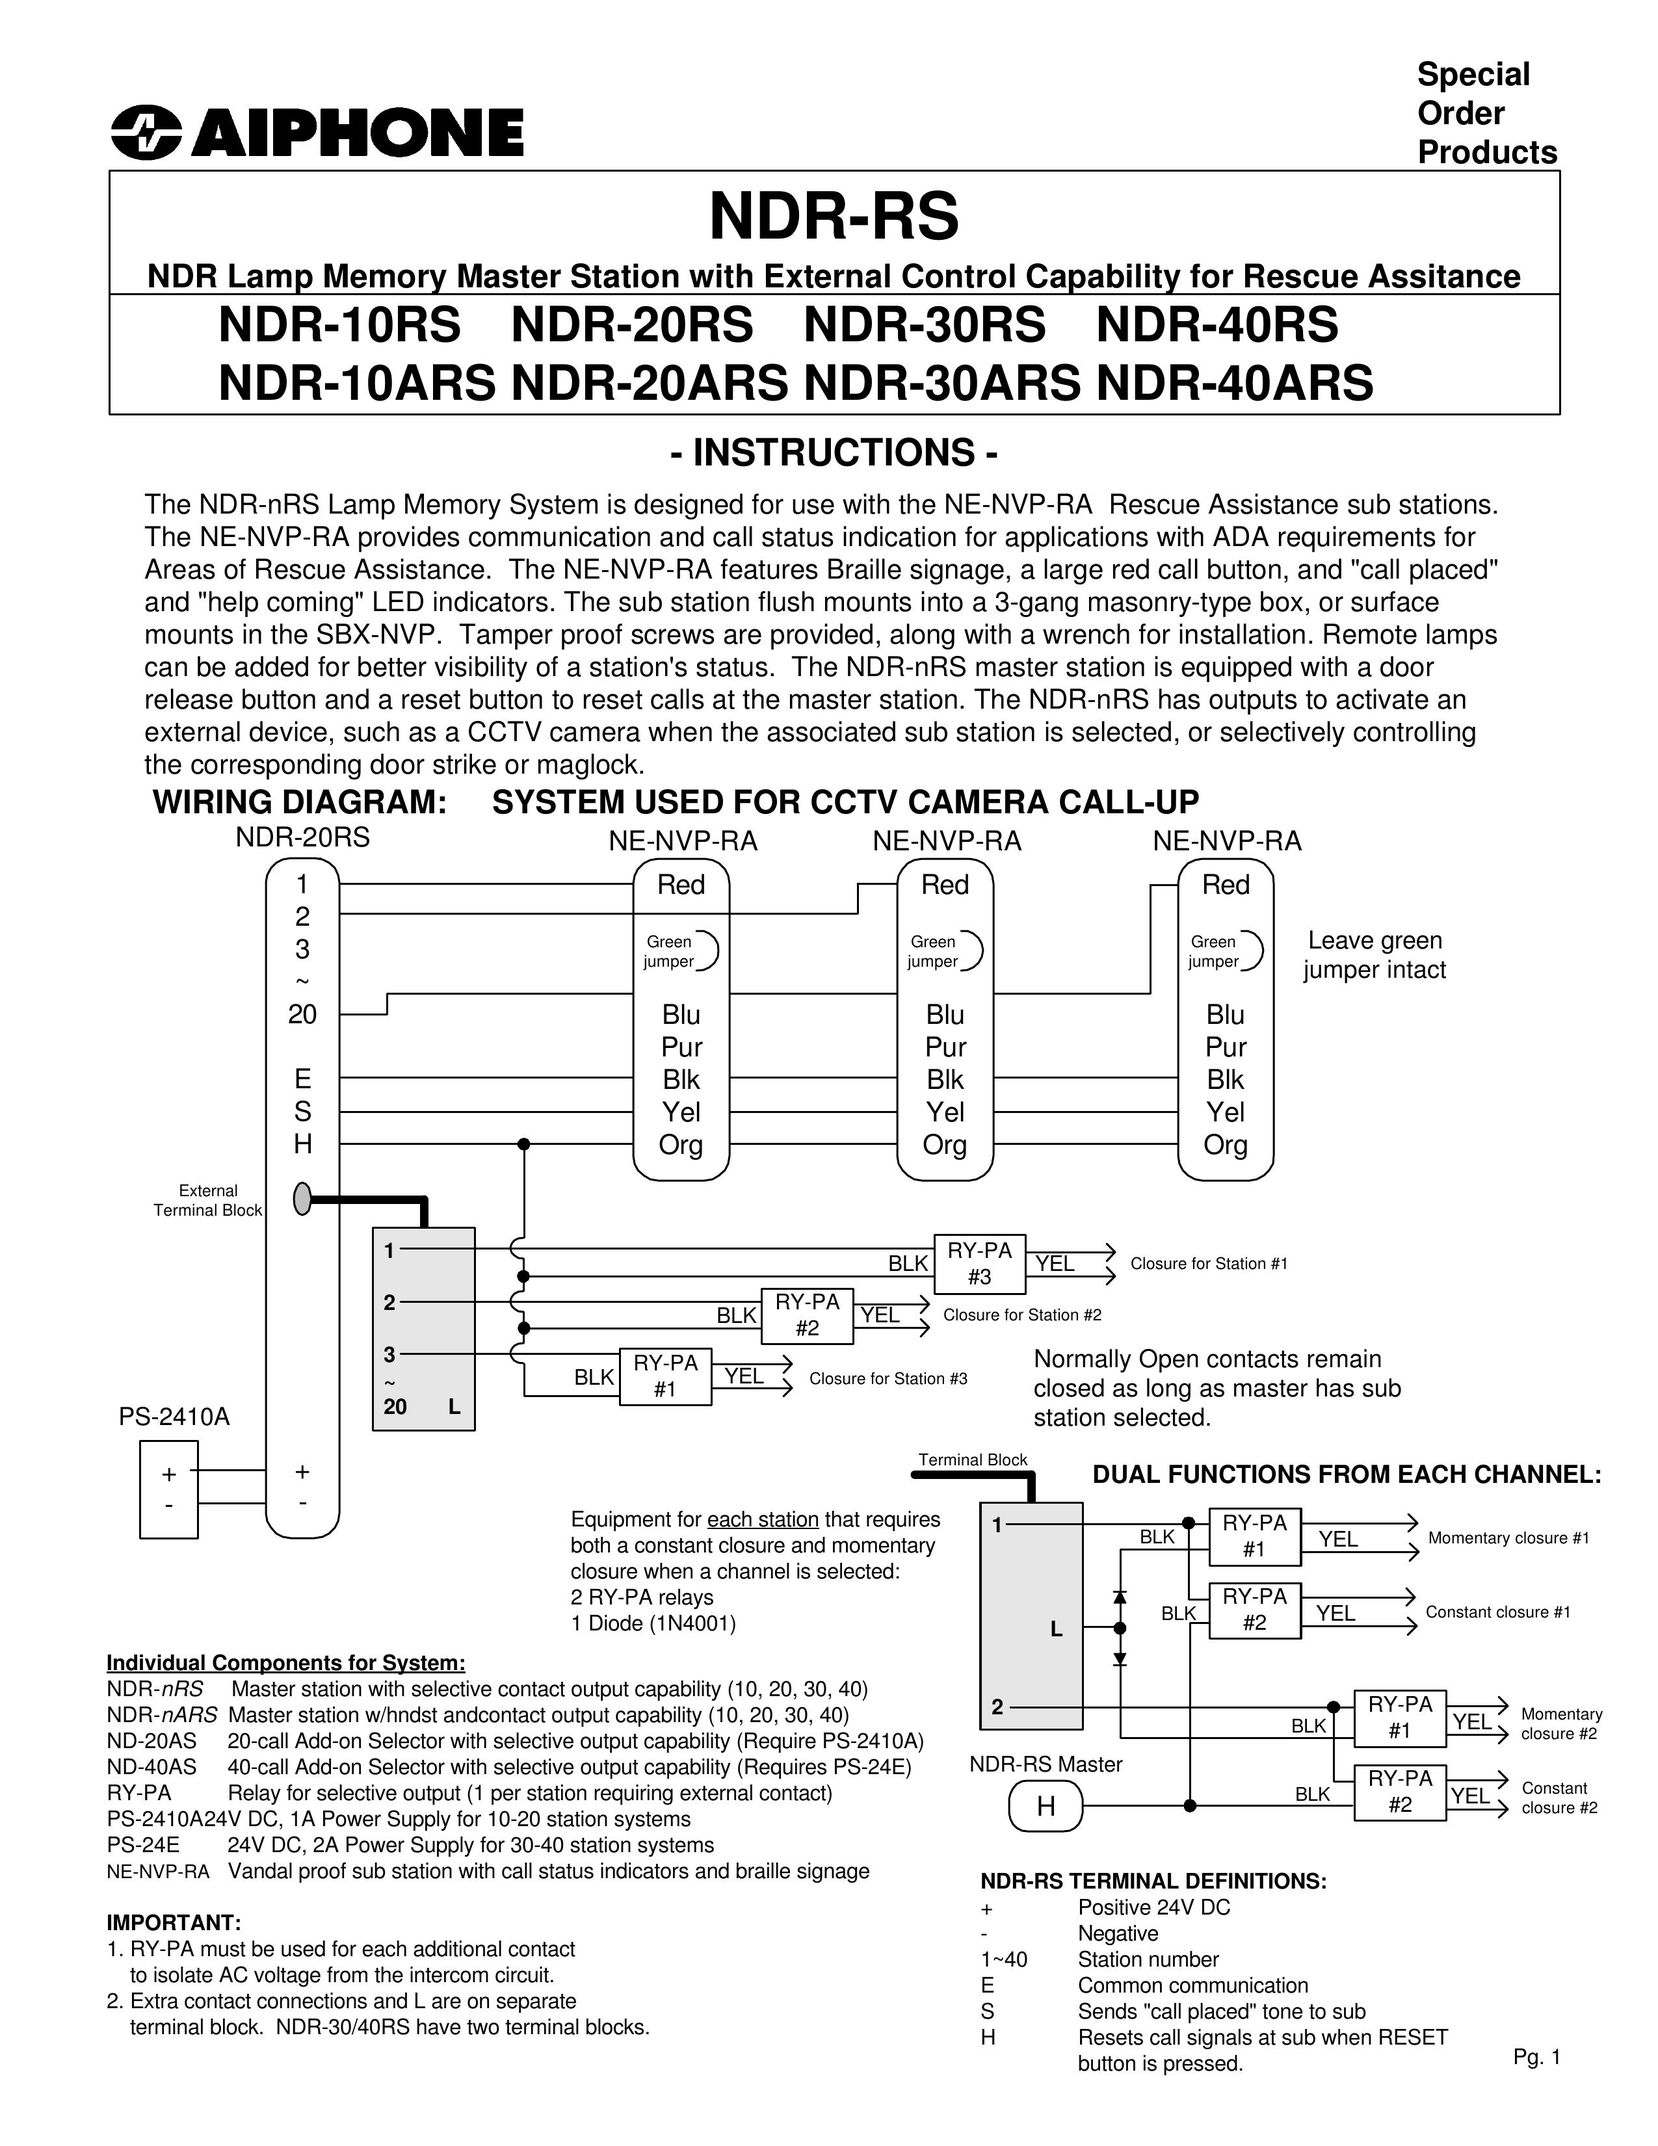 Aiphone NDR-10ARS Telephone User Manual